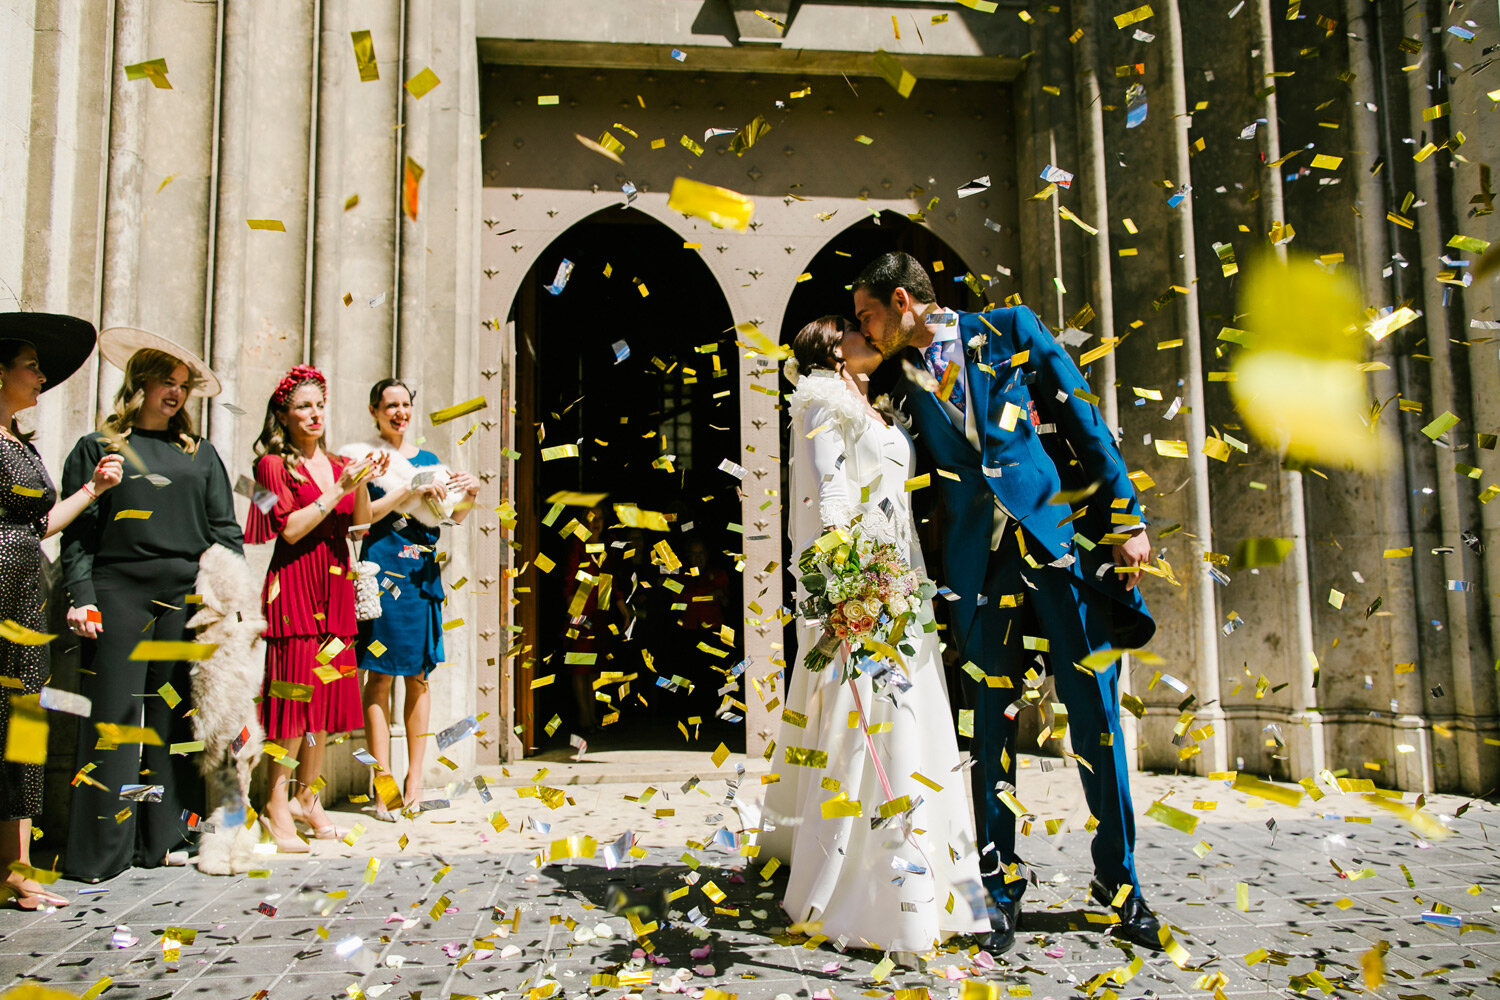 118-vilayvidal-fotografia-bodas-gandia-valencia-alicante-boda-elia-fernando_mas_dalzedo.jpg